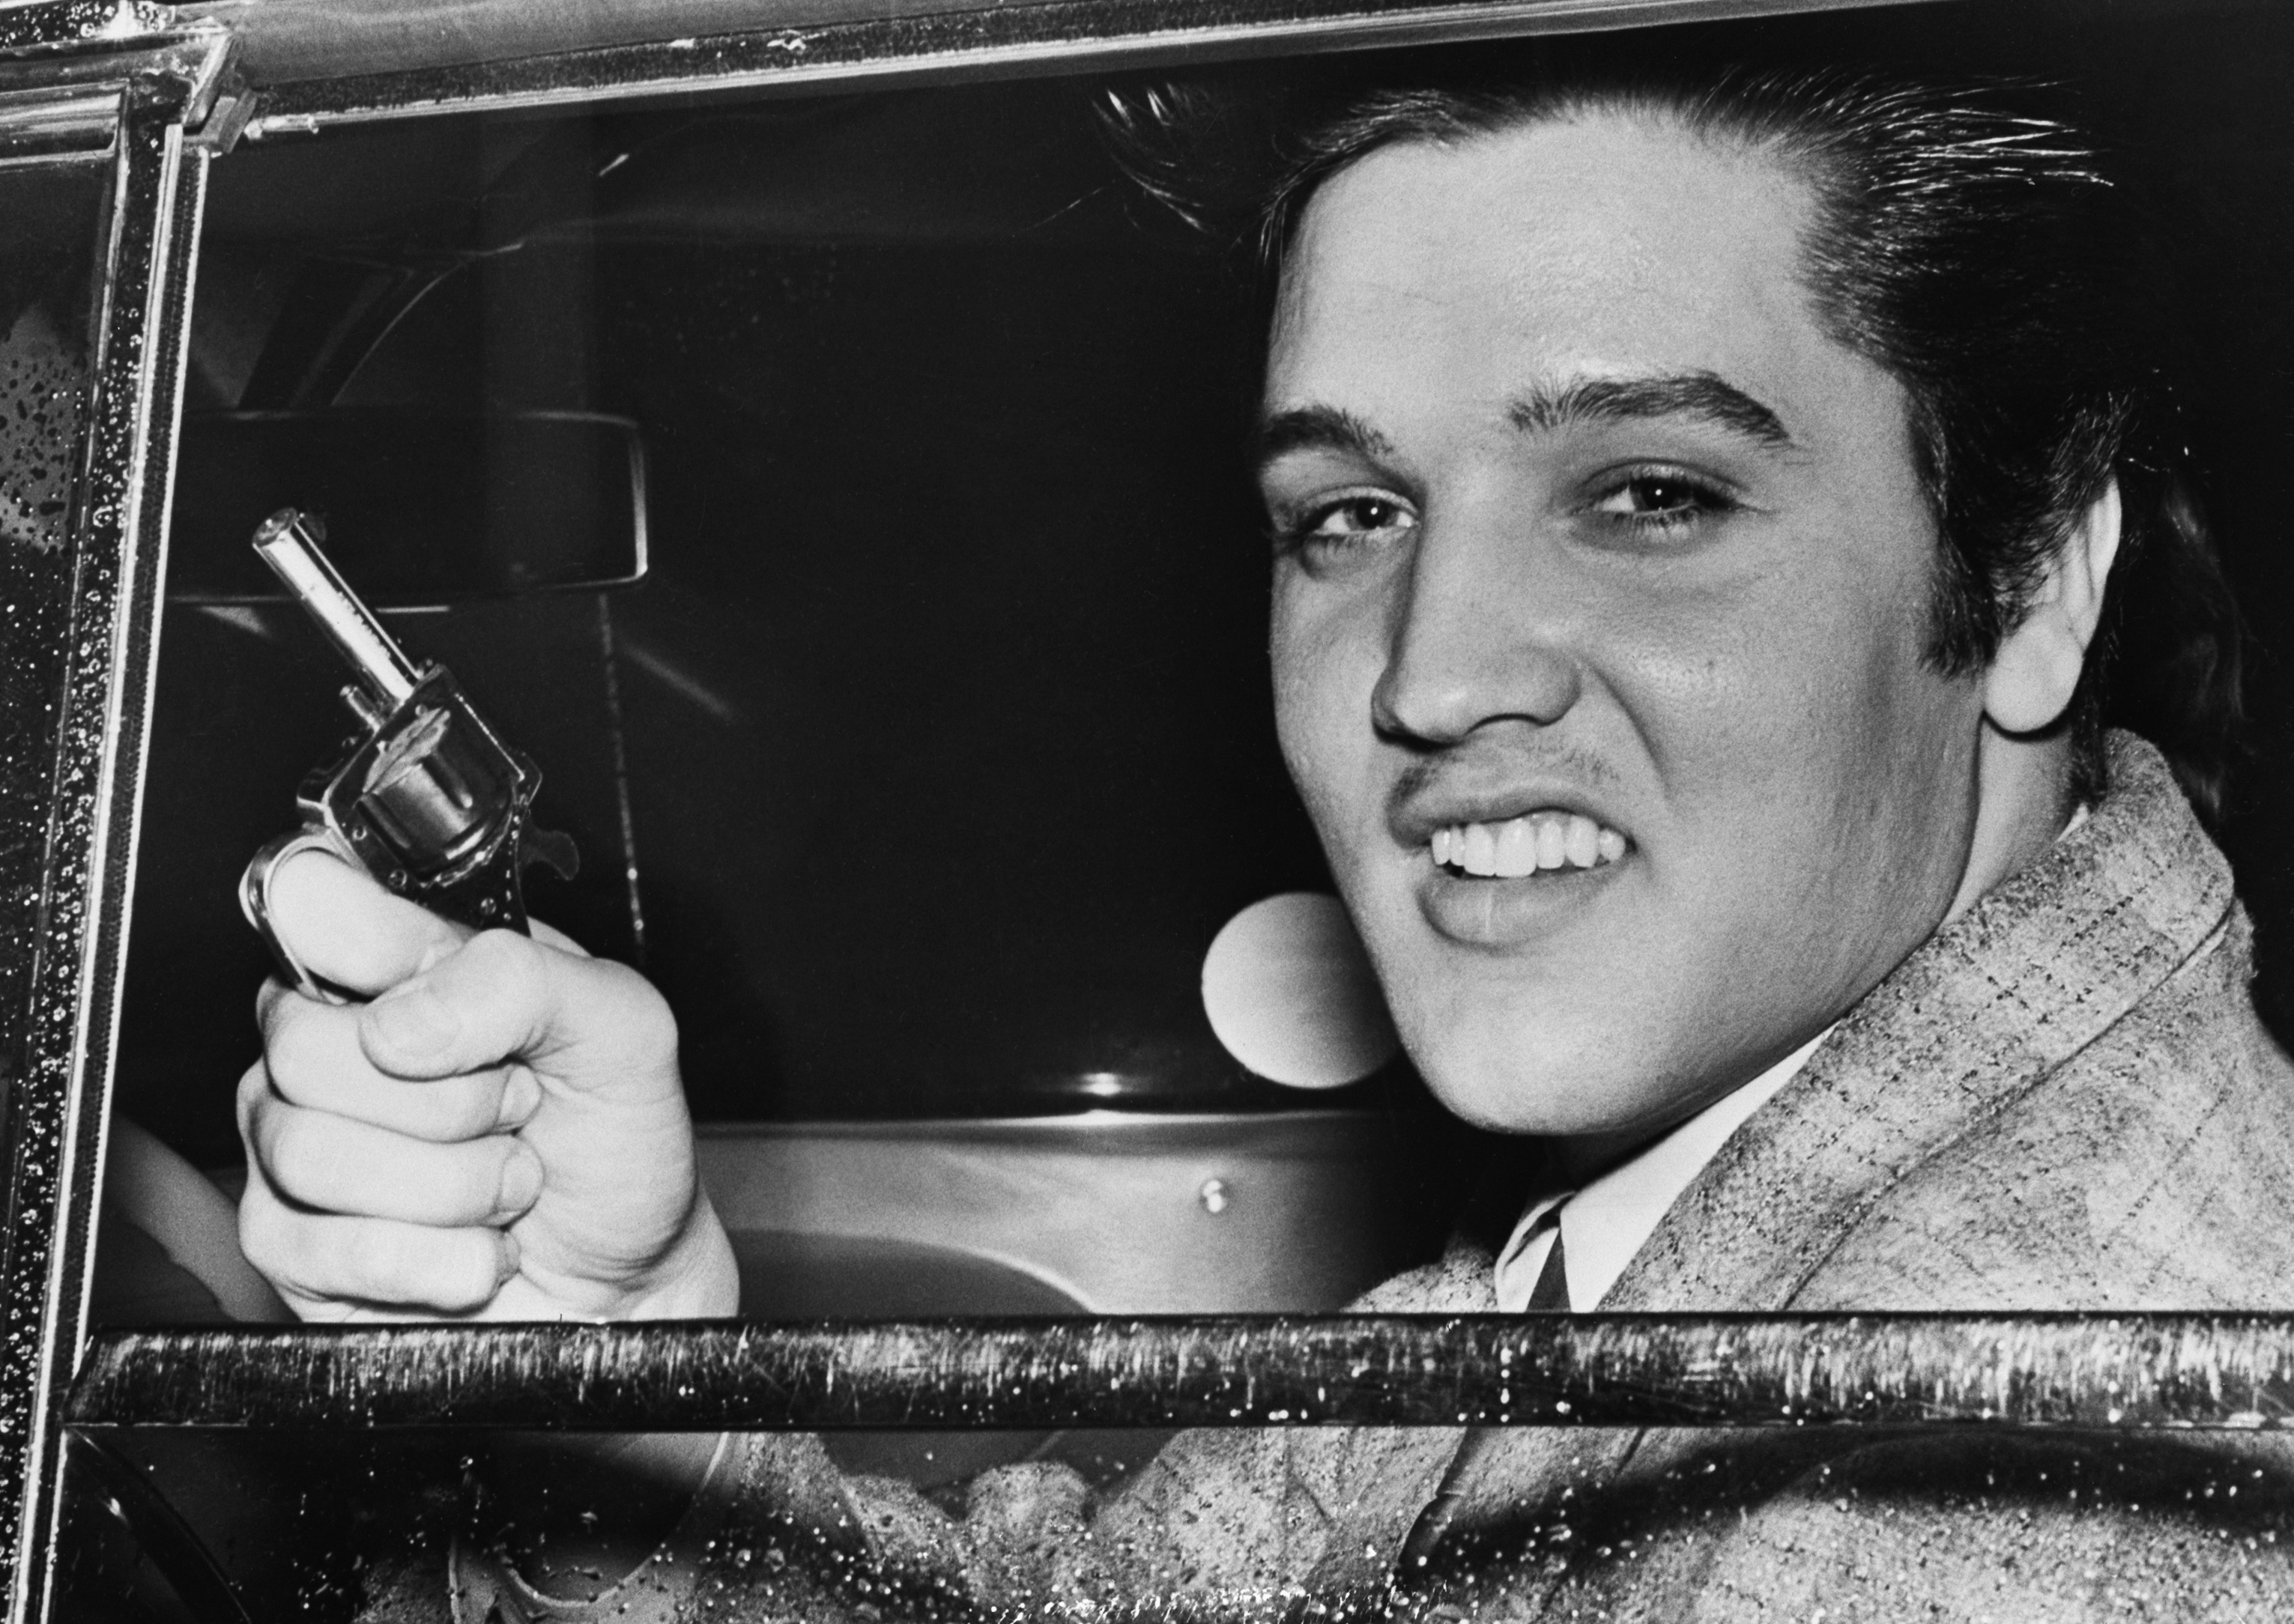 Elvis Presley holding a toy gun